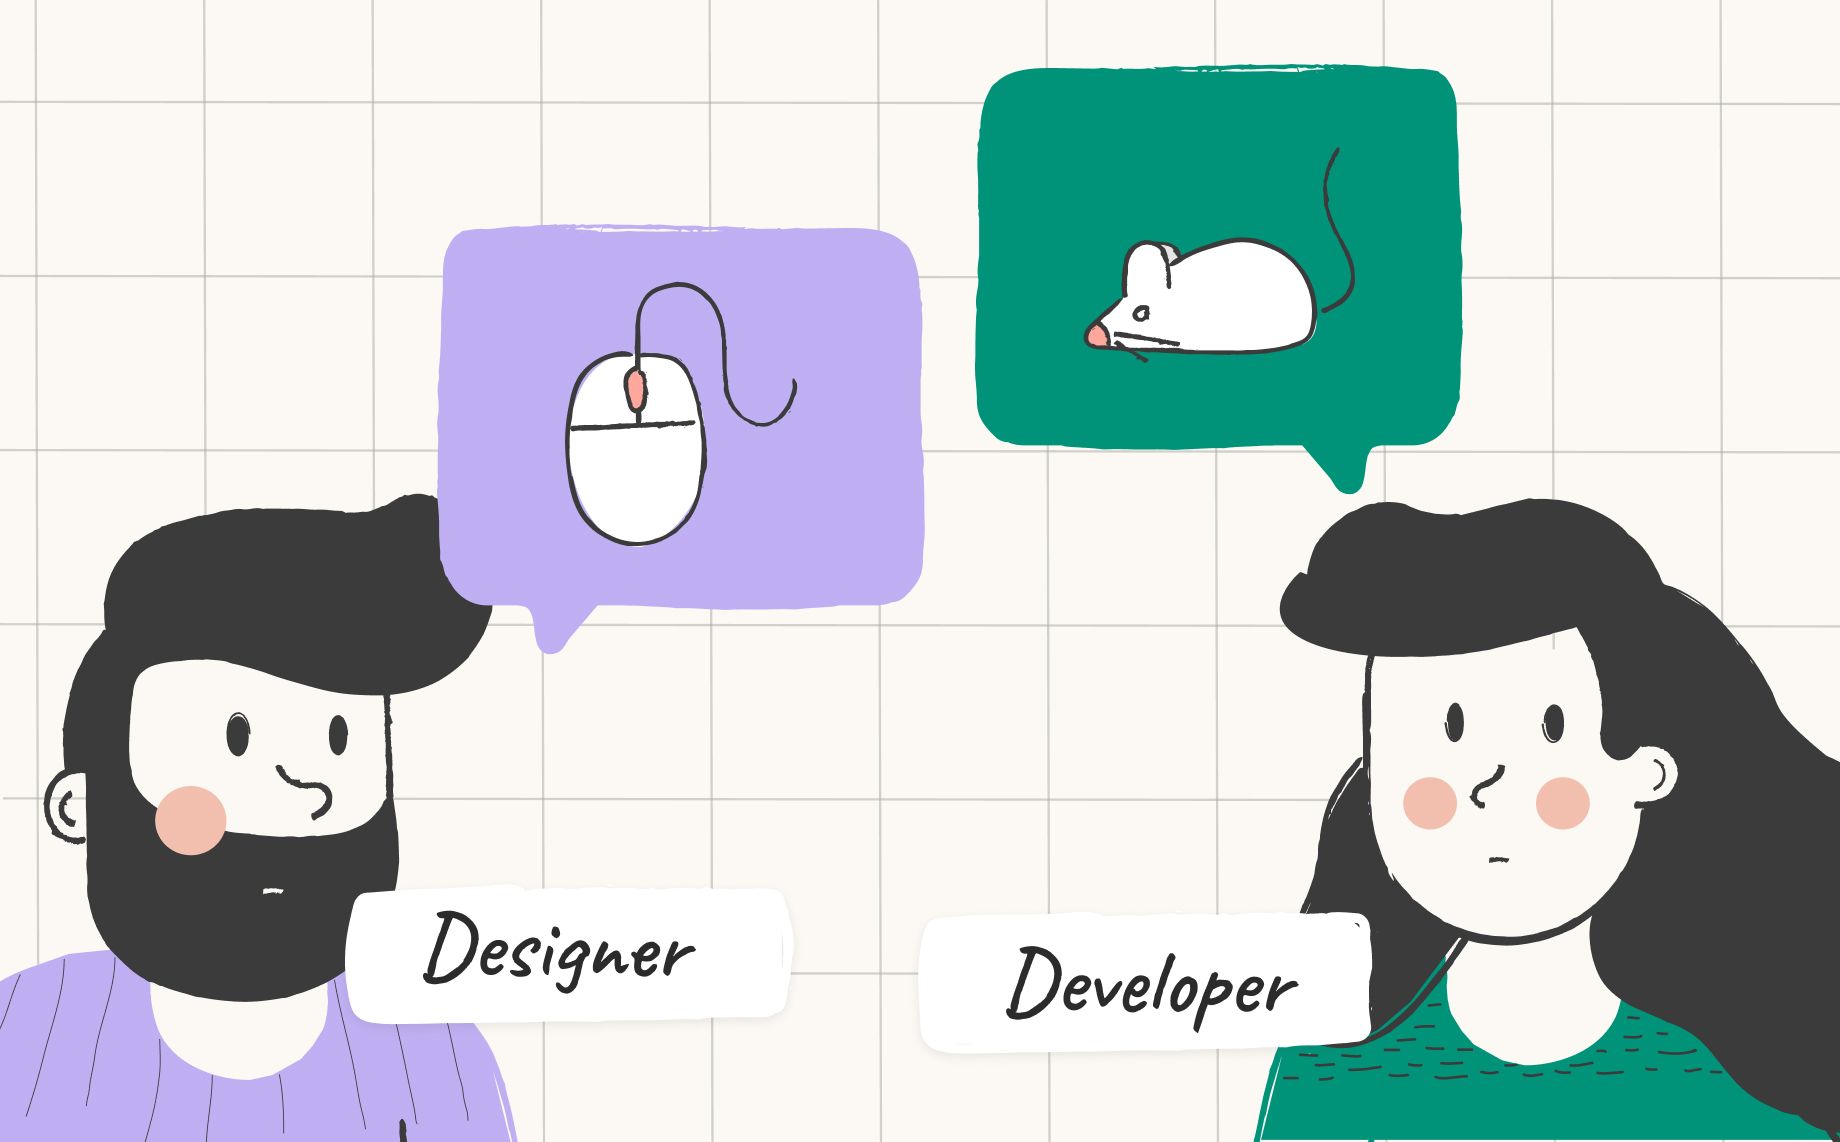 Why designer-developer handoff doesn’t work